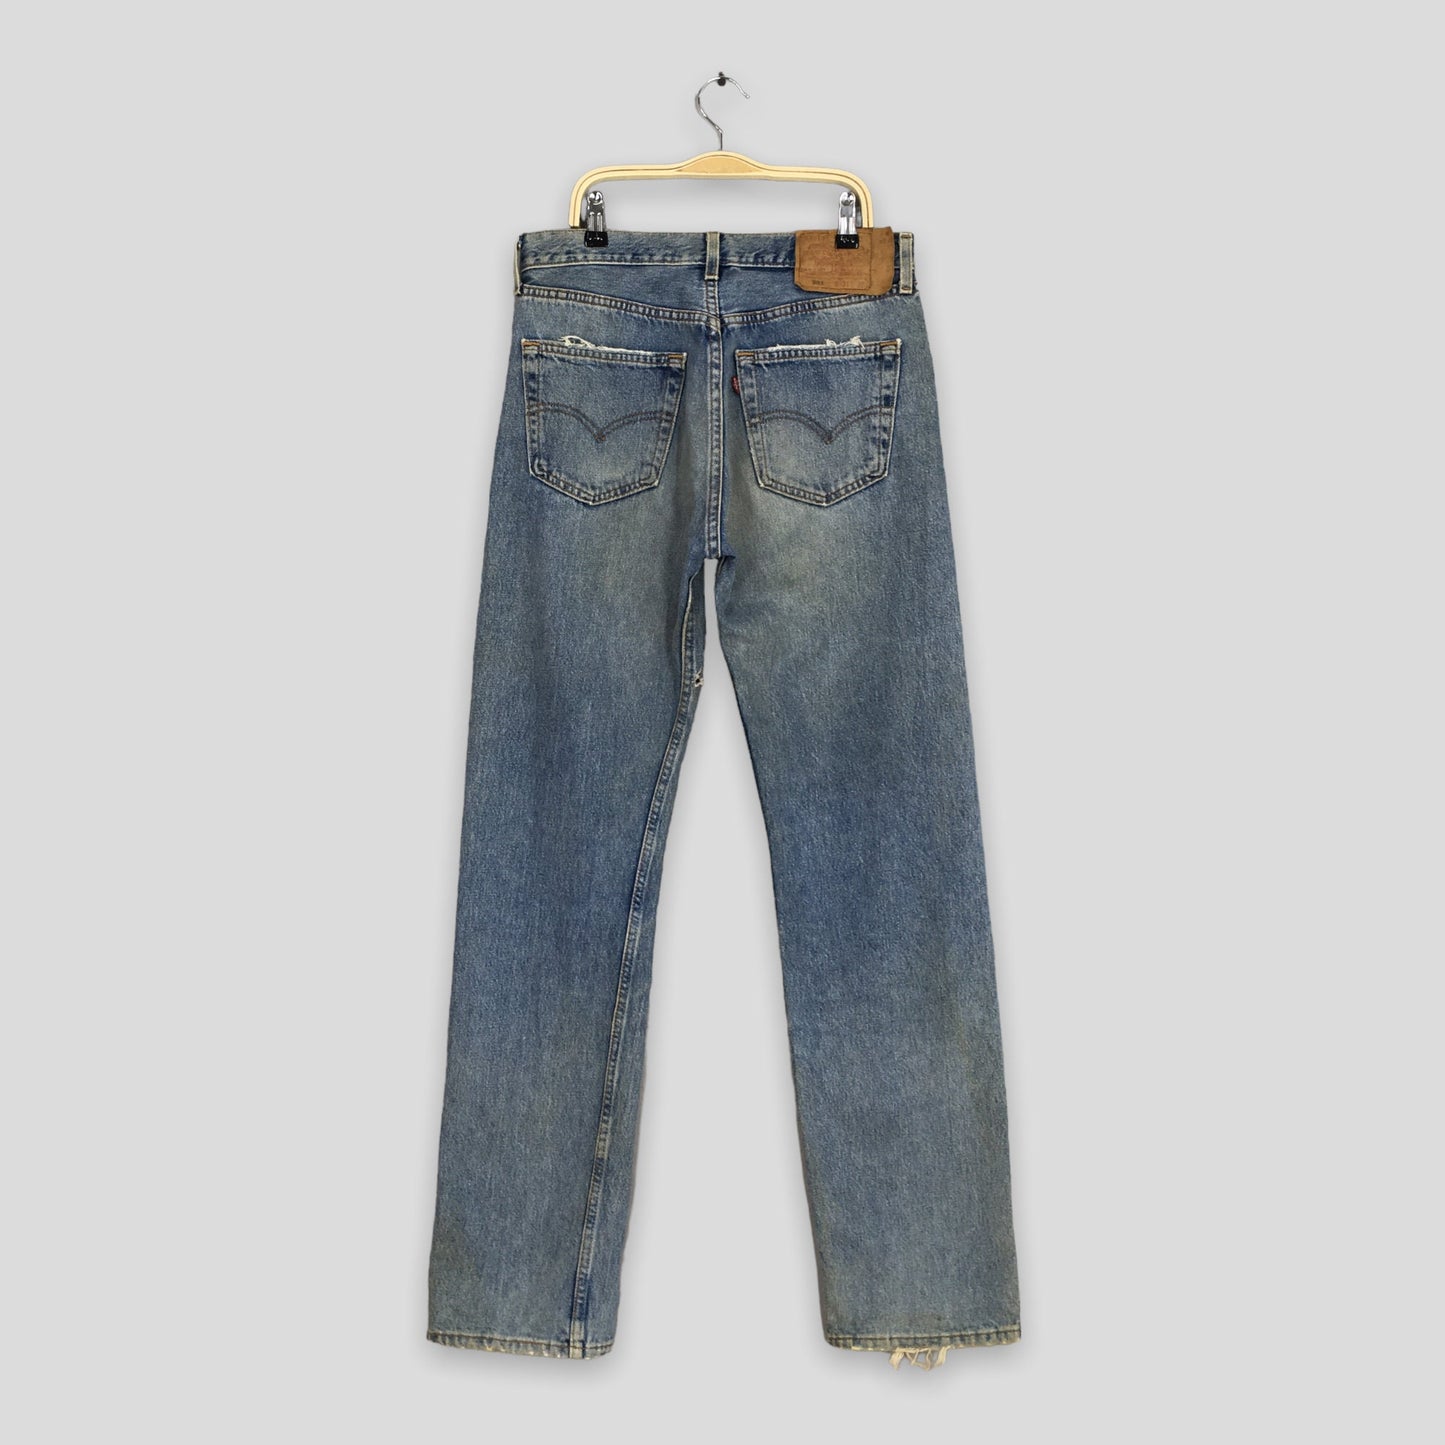 Levi's 501 Faded Dirty Stonewash Jeans Size 29x32.5